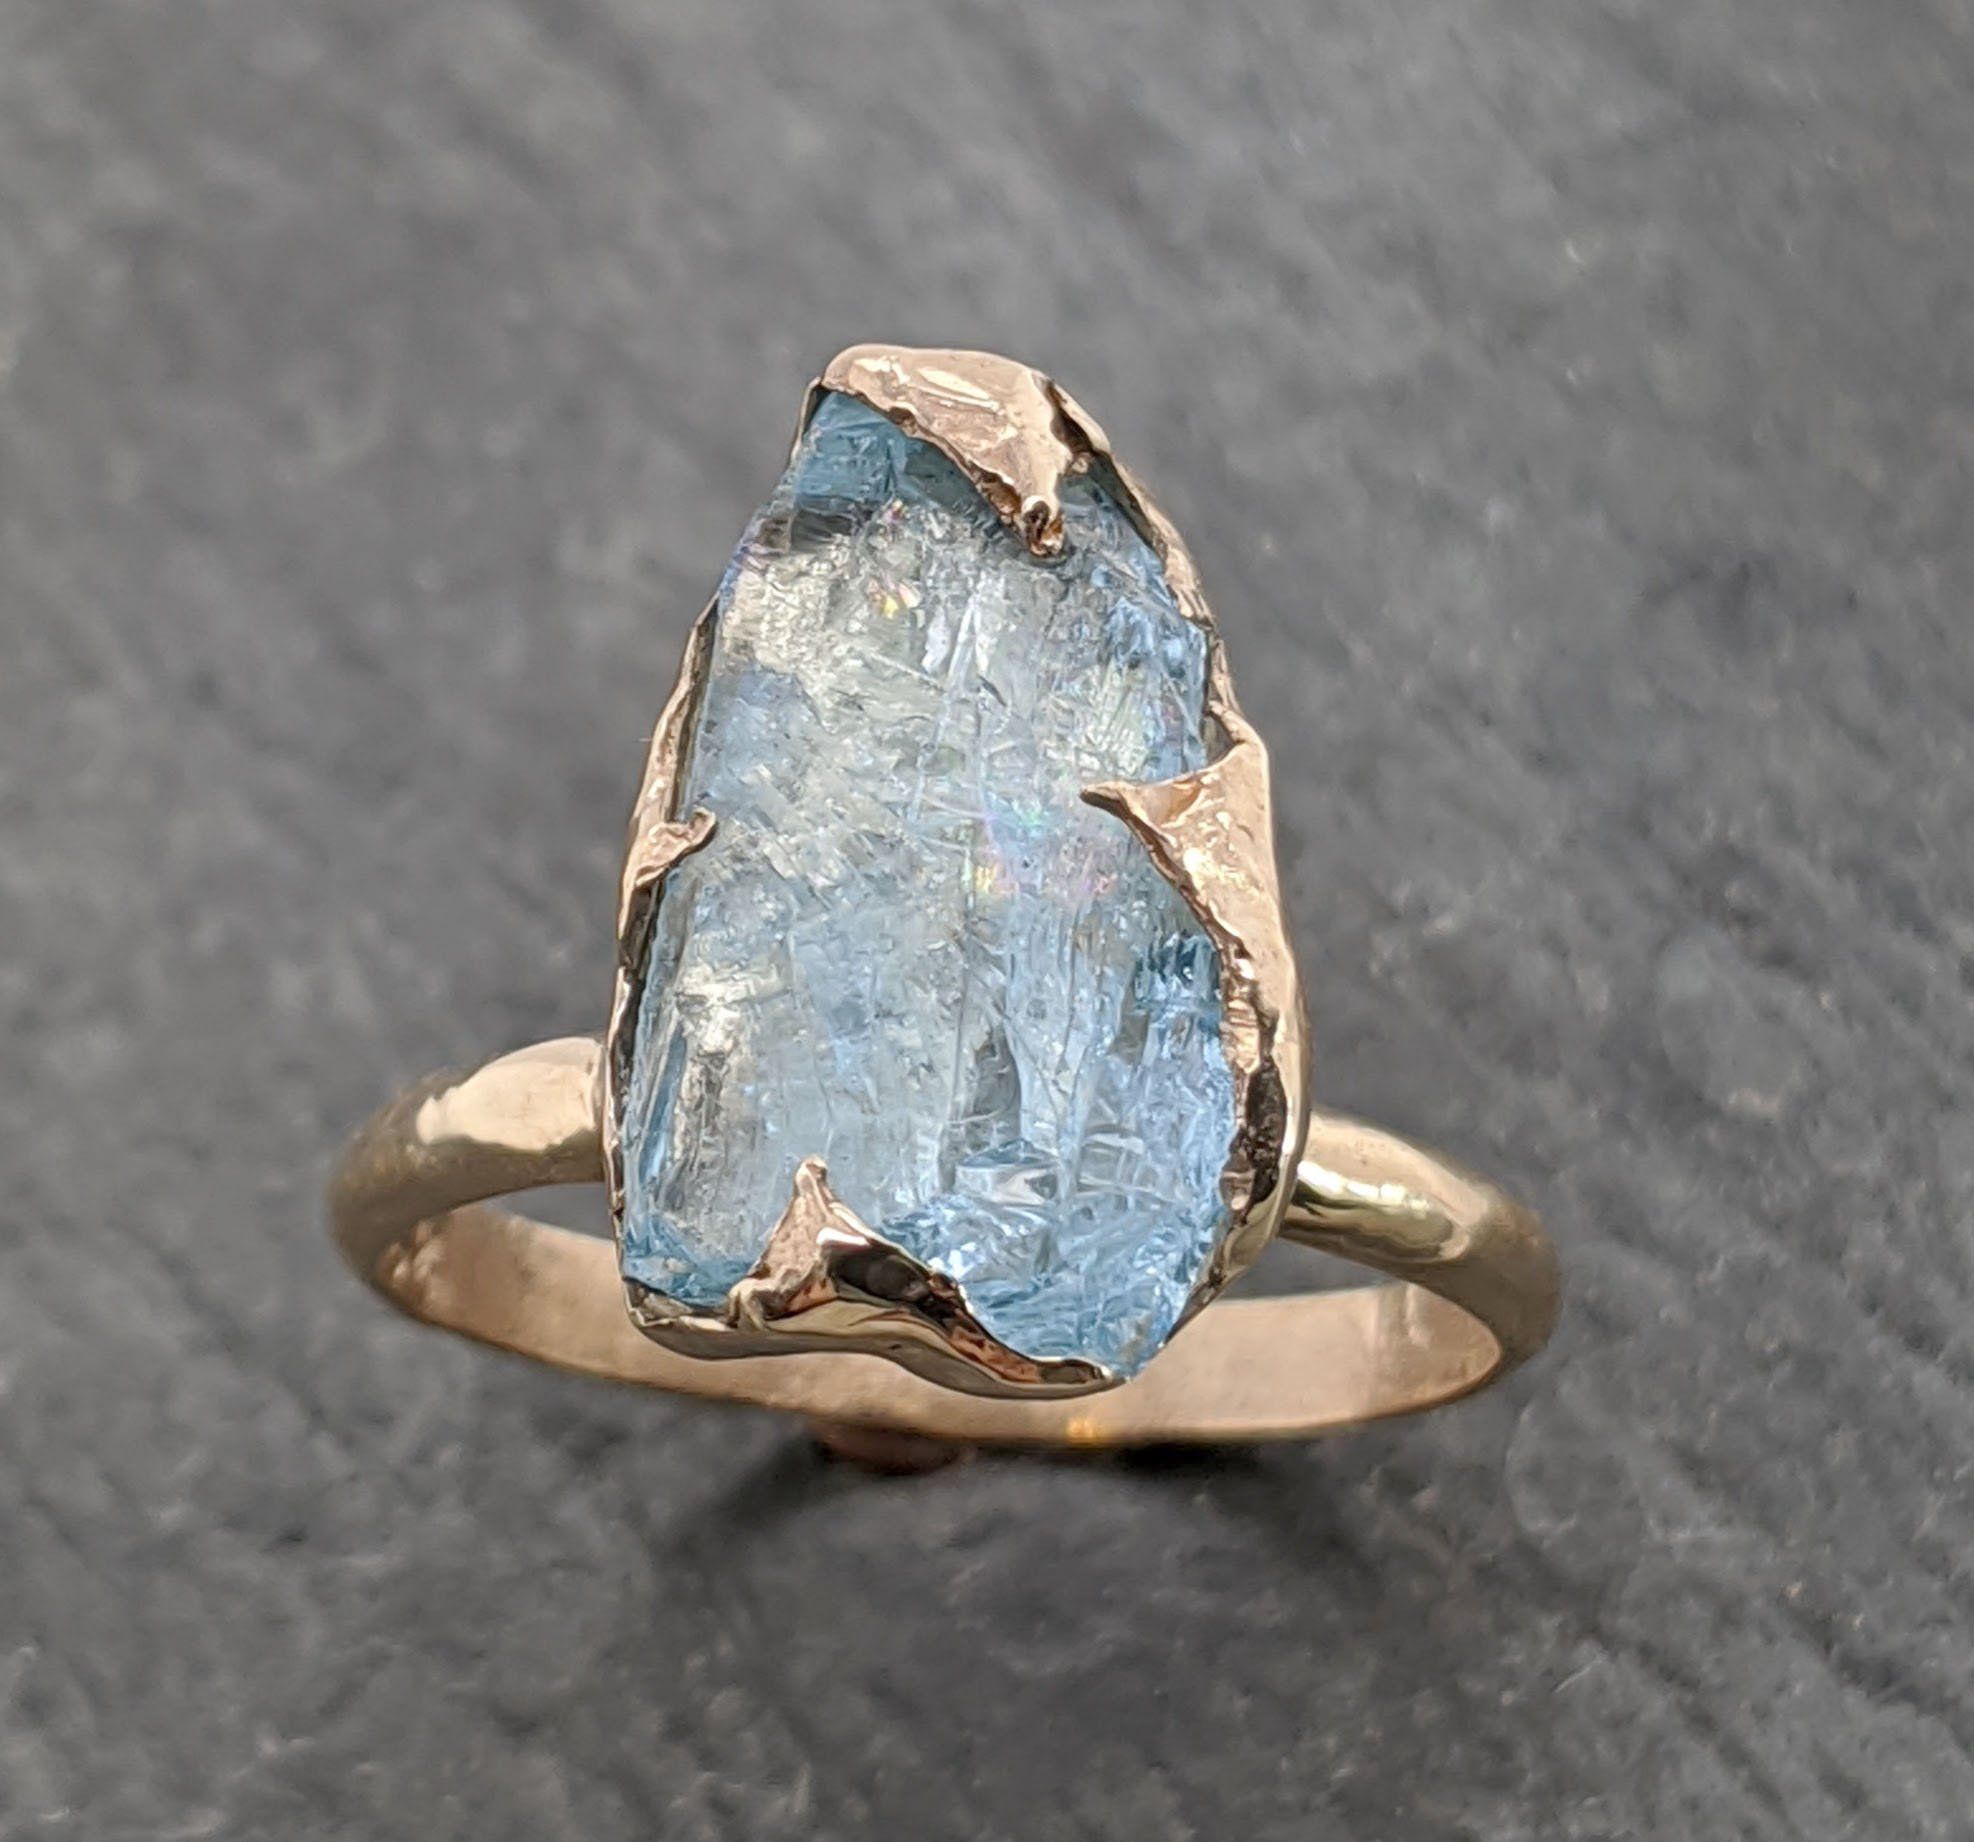 raw uncut aquamarine solitaire 14k yellow gold ring custom one of a kind gemstone ring bespoke byangeline 2090 Alternative Engagement